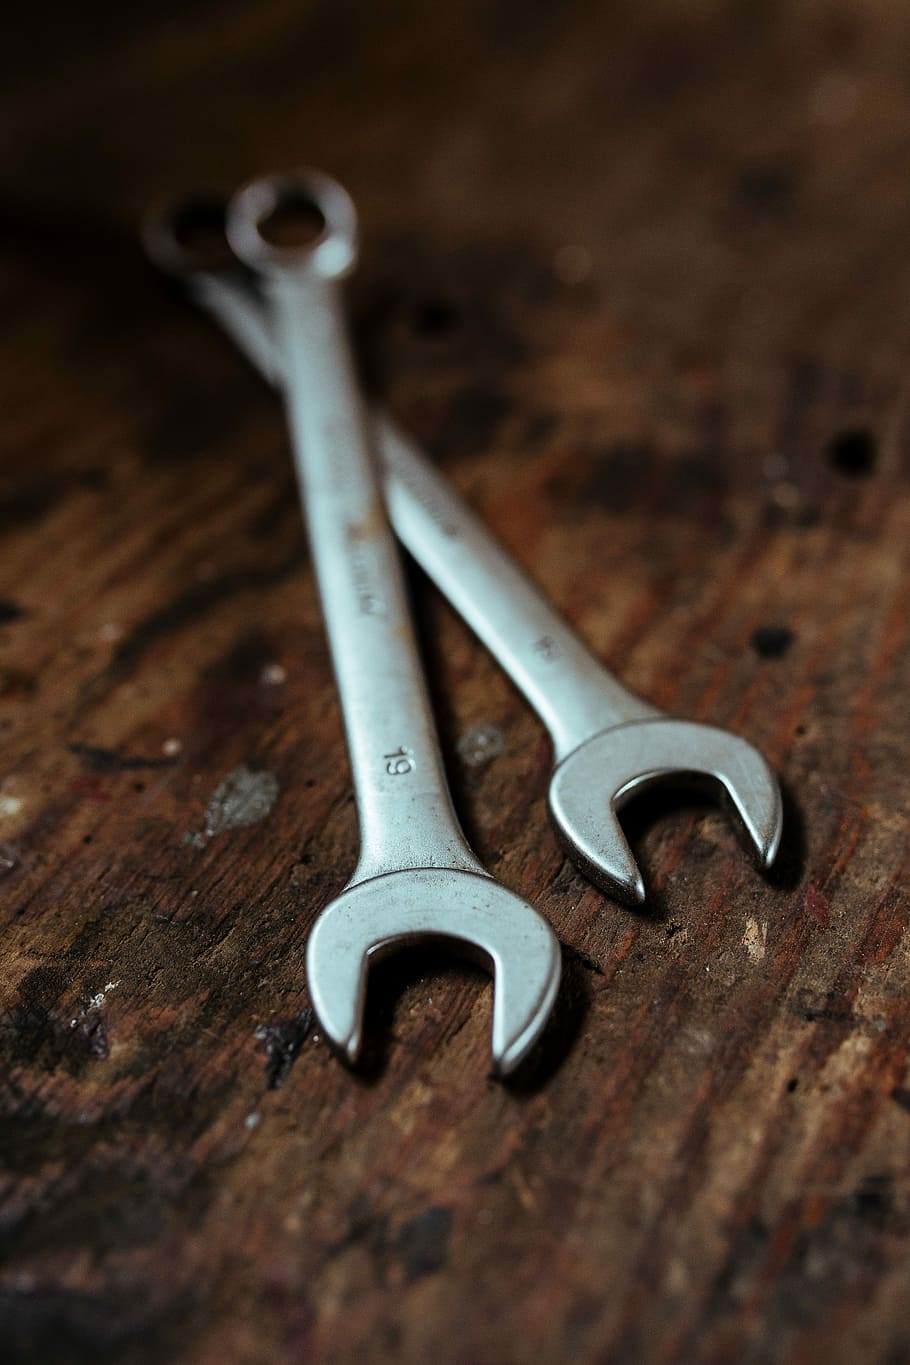 nails, bolts, workshop, Tools, wooden, metal, nuts, diy, garage, shed